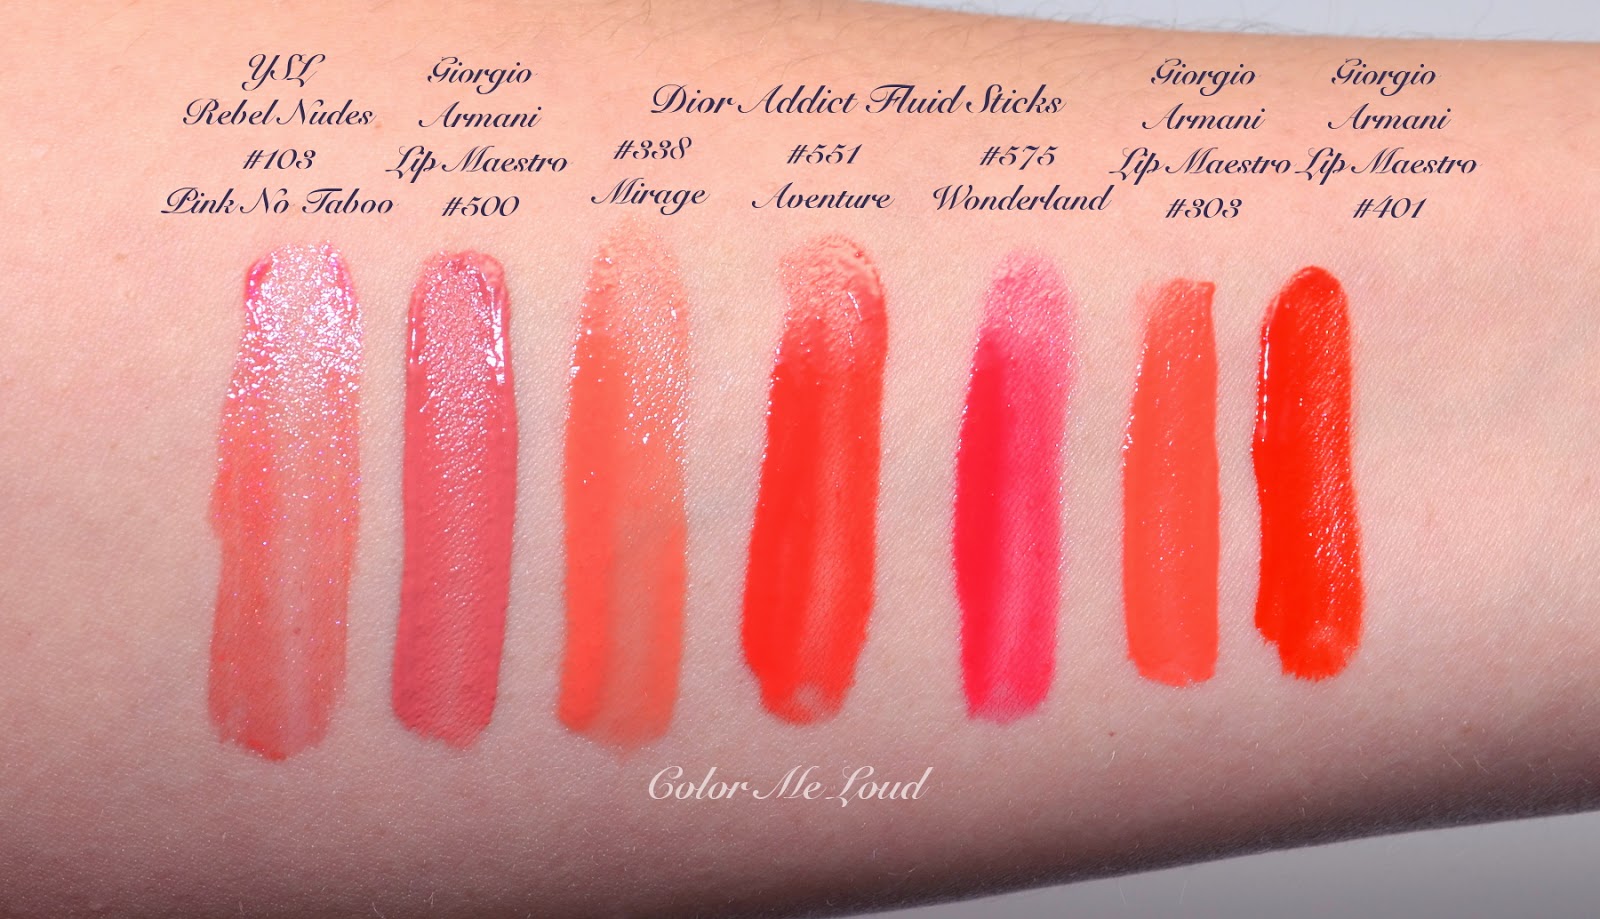 Re: Dior addict fluid lipstick - Beauty 